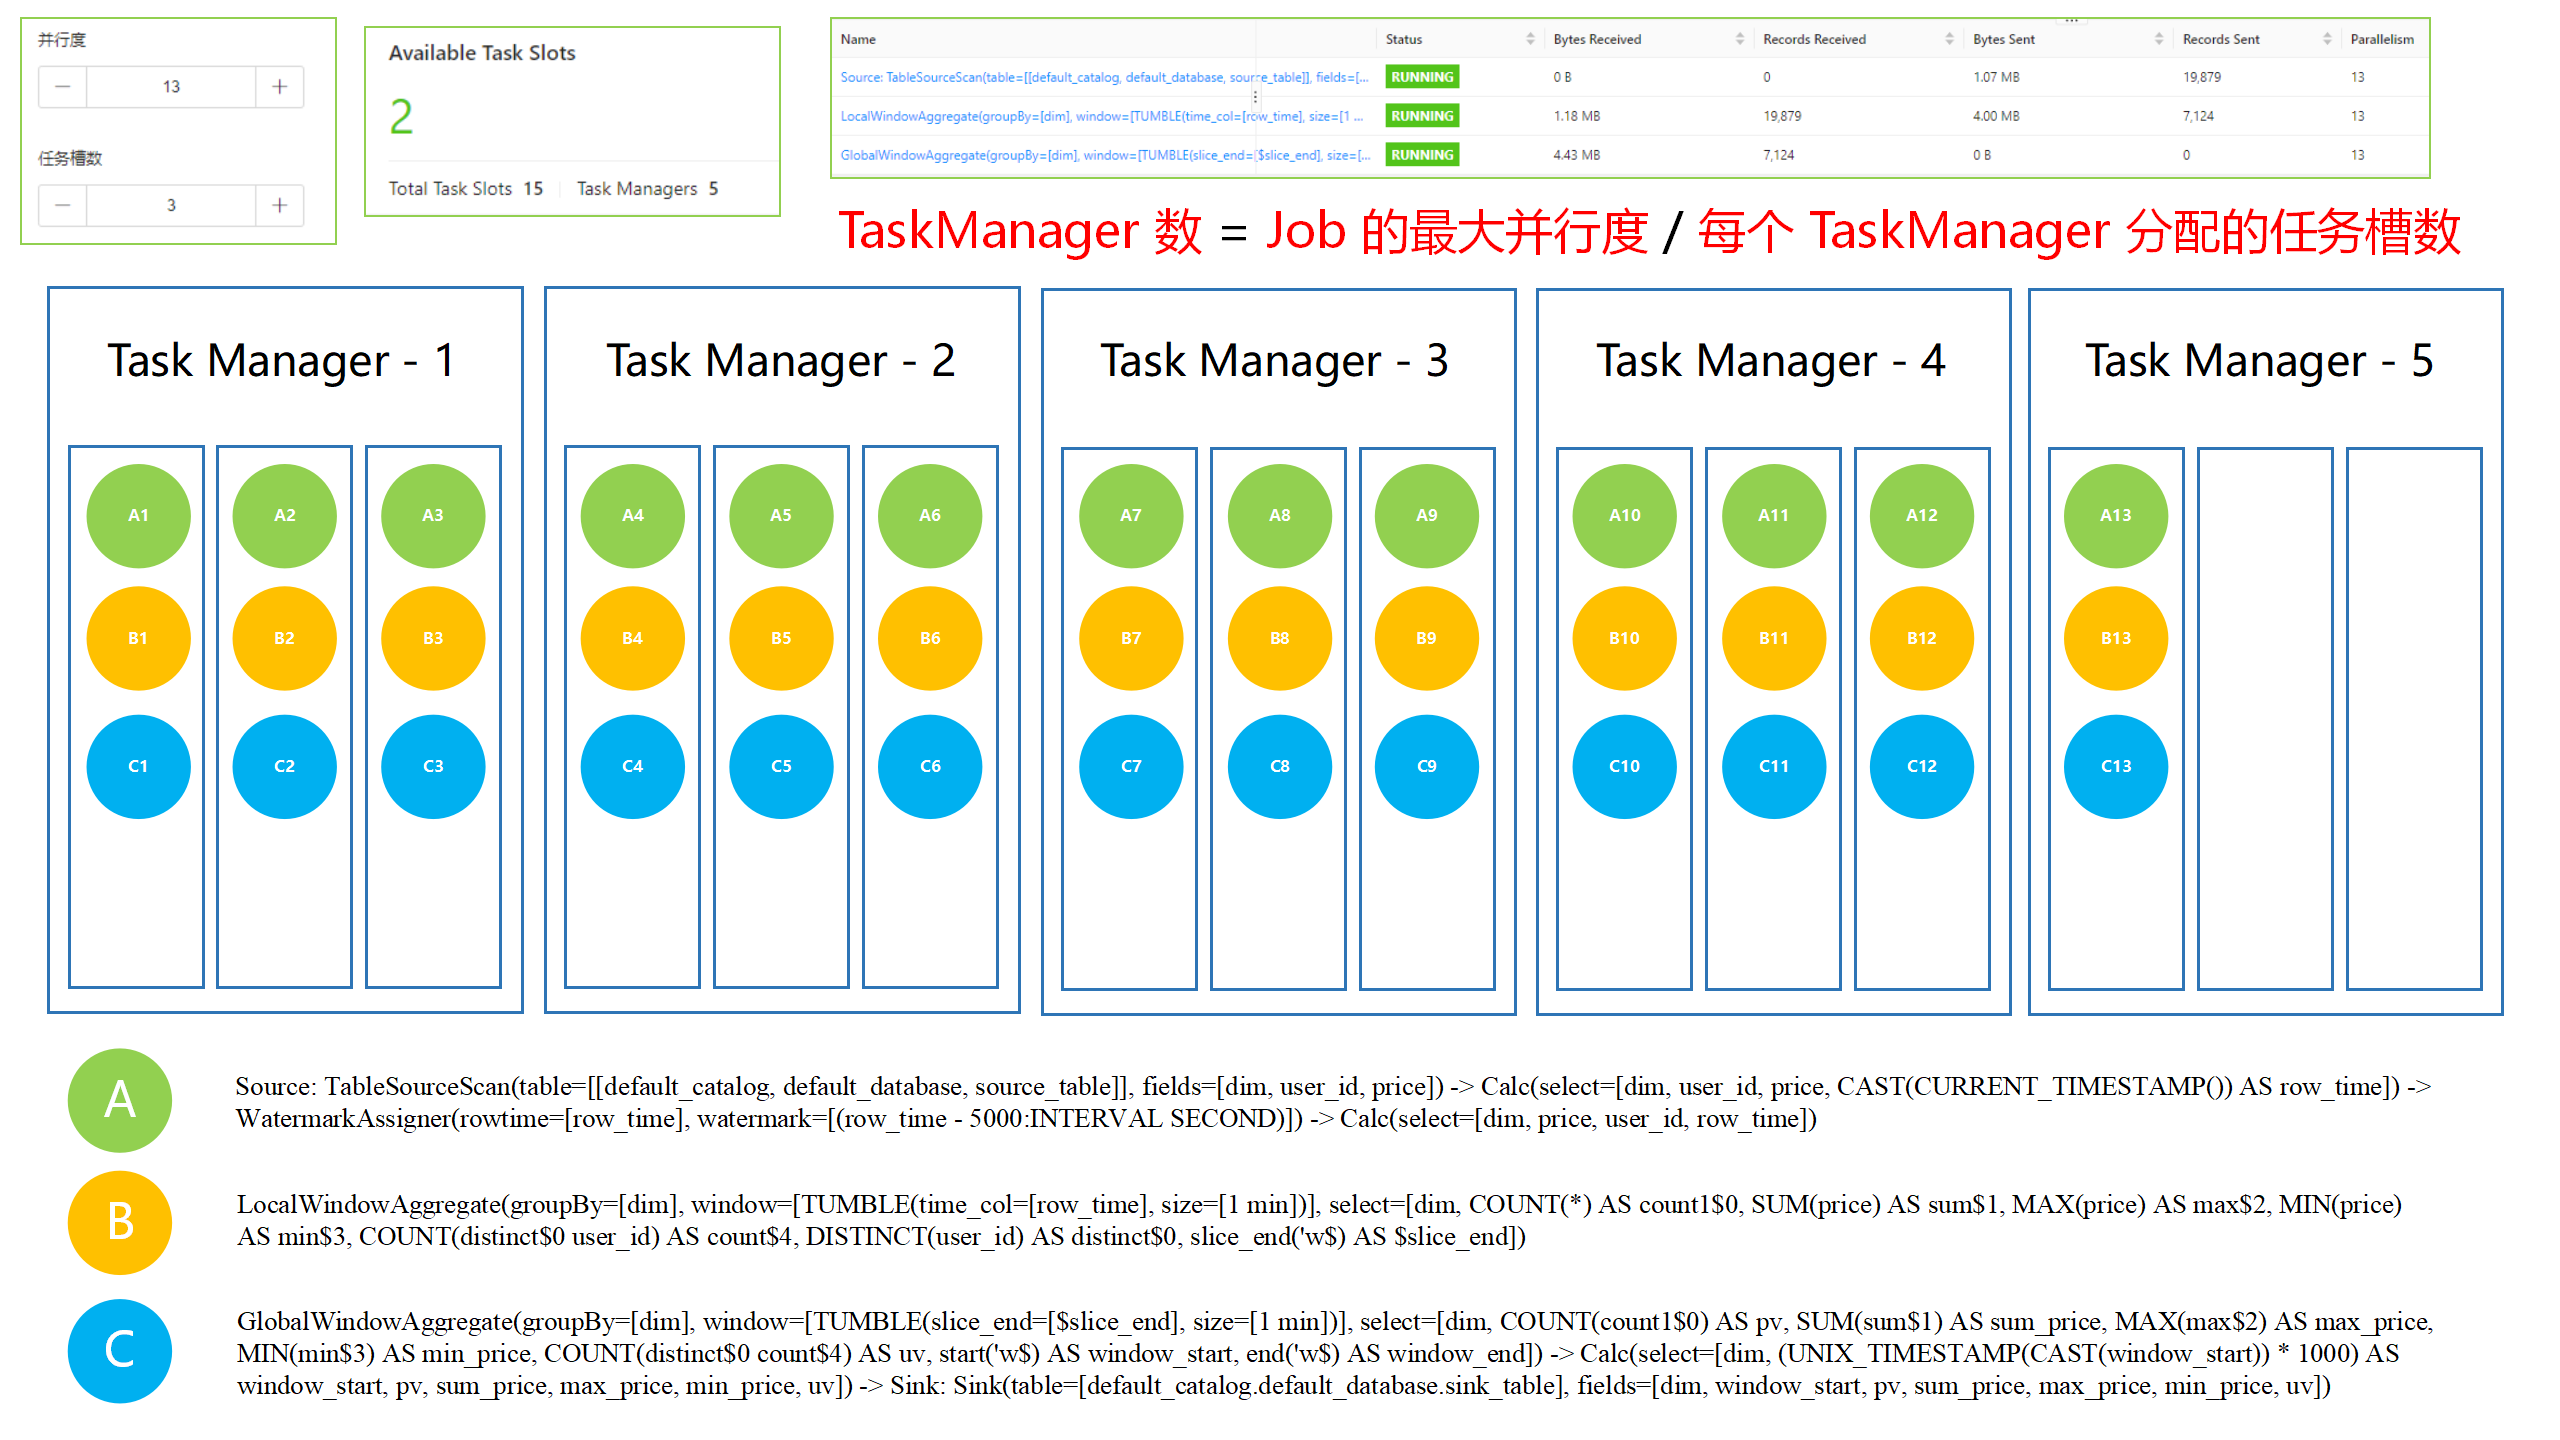 【大数据】Flink on YARN，如何确定 TaskManager 数